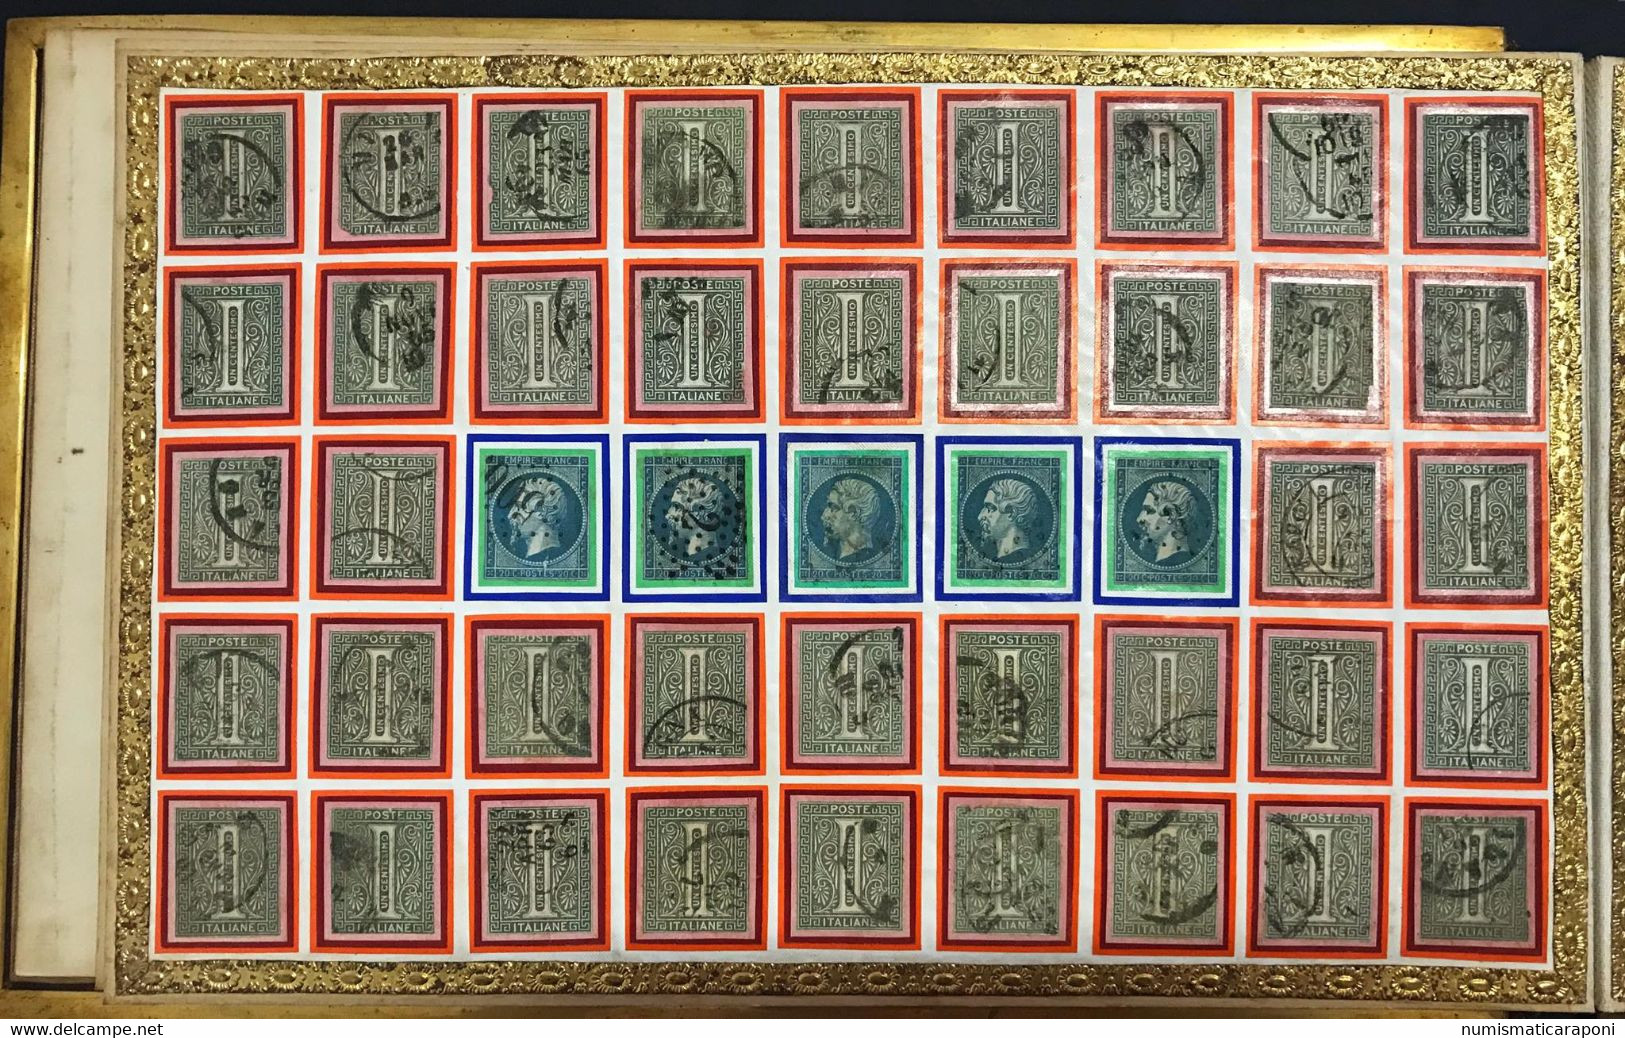 italia italy bellissimo album di francobolli pistoia 1865 parrocchia cavalier Lorenzo